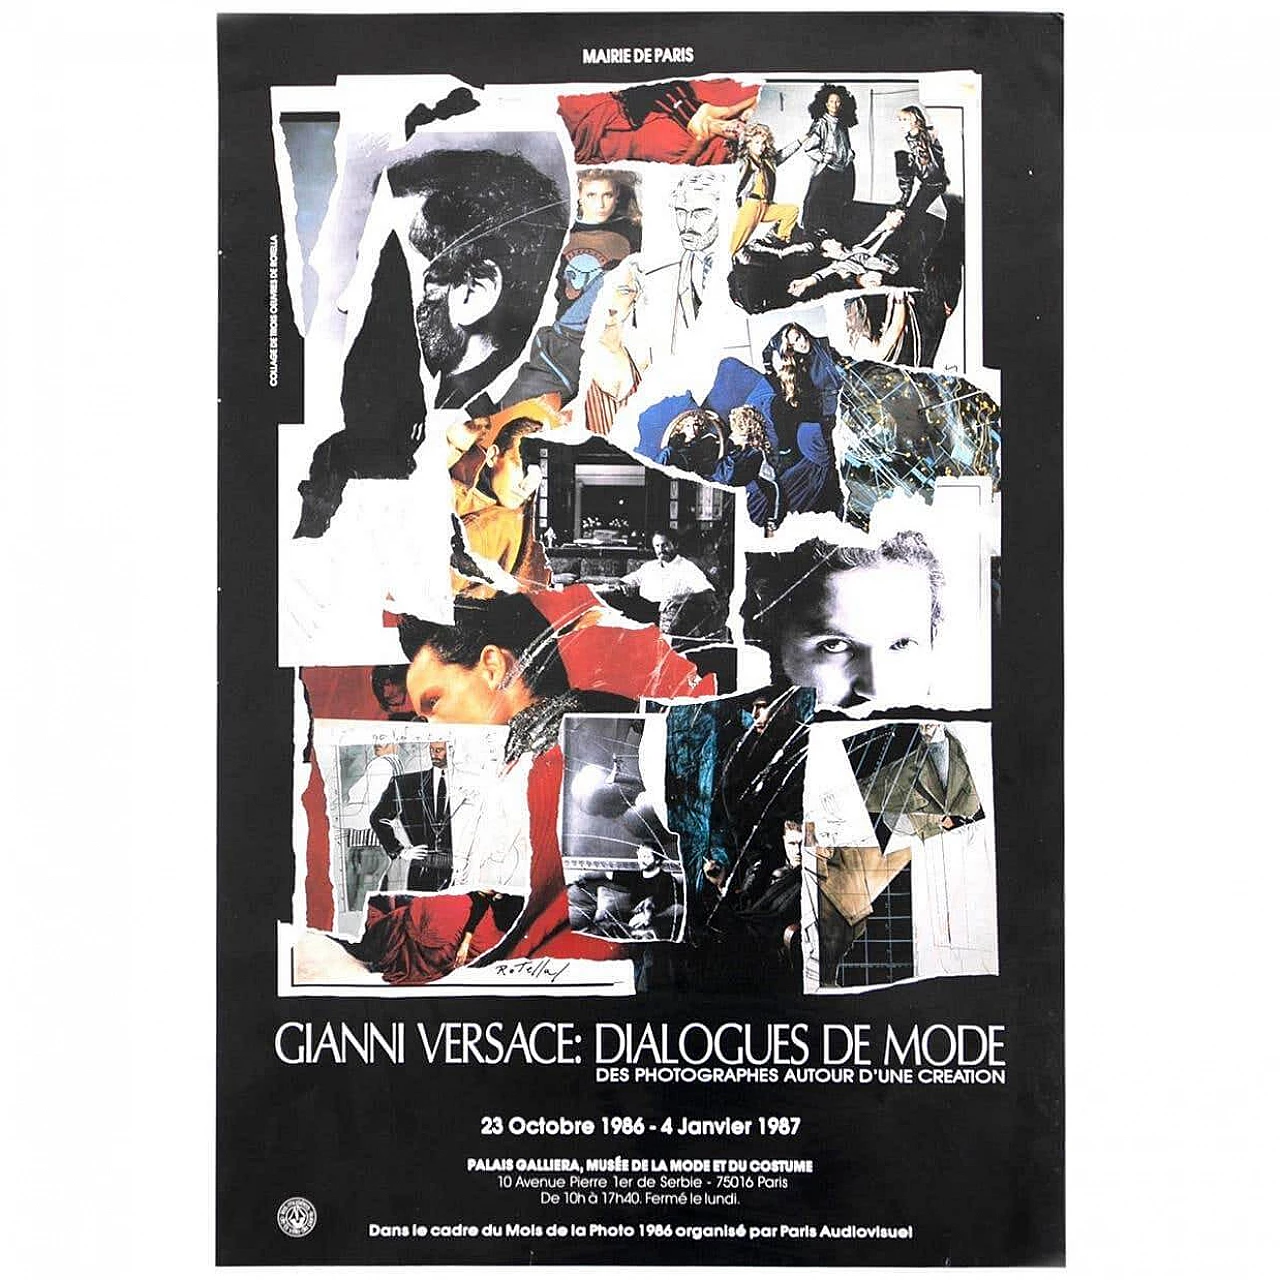 Locandina di Mimmo Rotella per la Mostra Dialogue du Mode di Gianni Versace, 1987 1